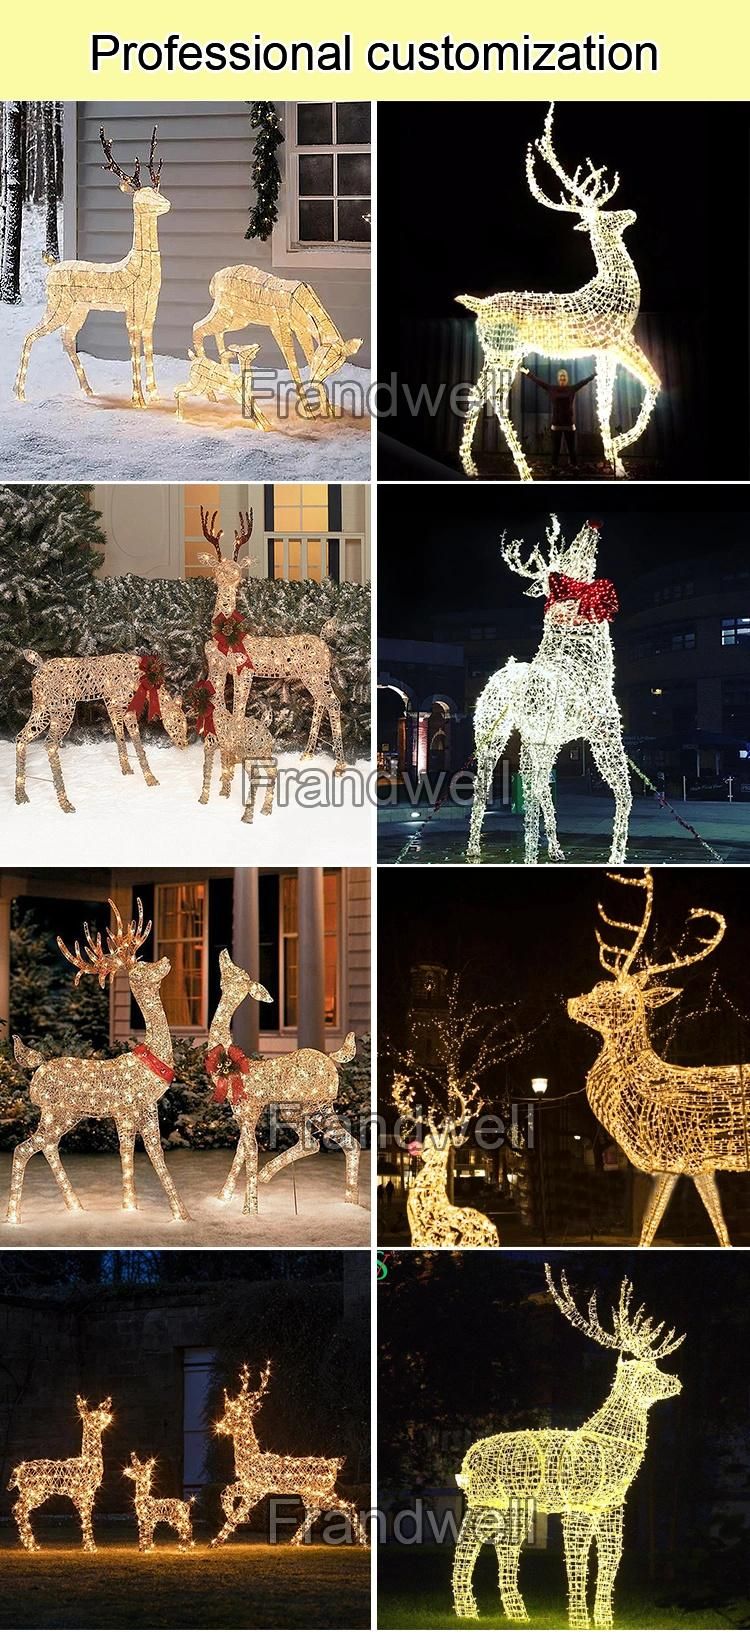 New Christmas Deer Outdoor Waterproof Festival Lighting Christmas Decoration